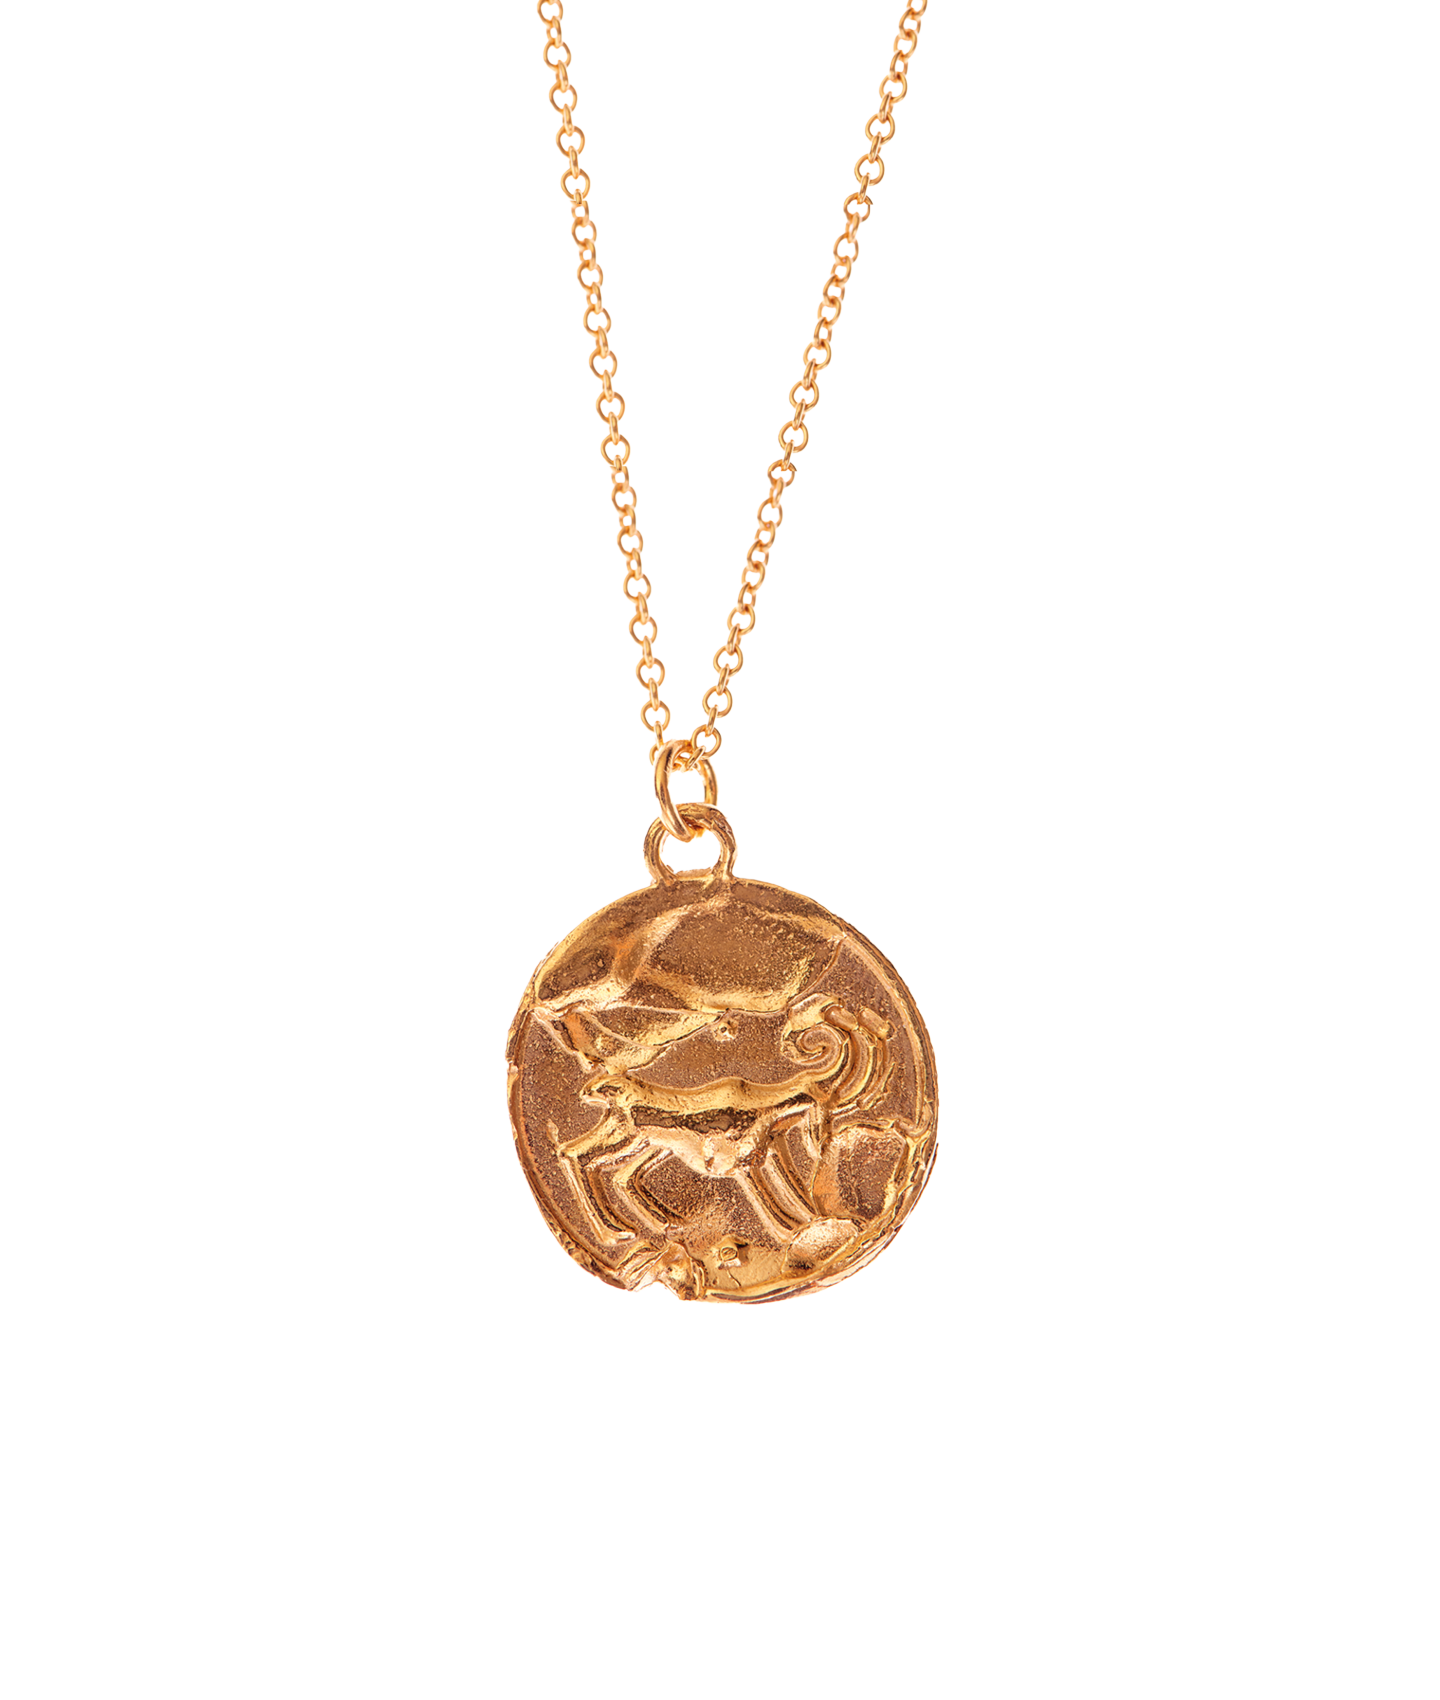 Zodiac Necklace | Astro Gold Plated Jewelry